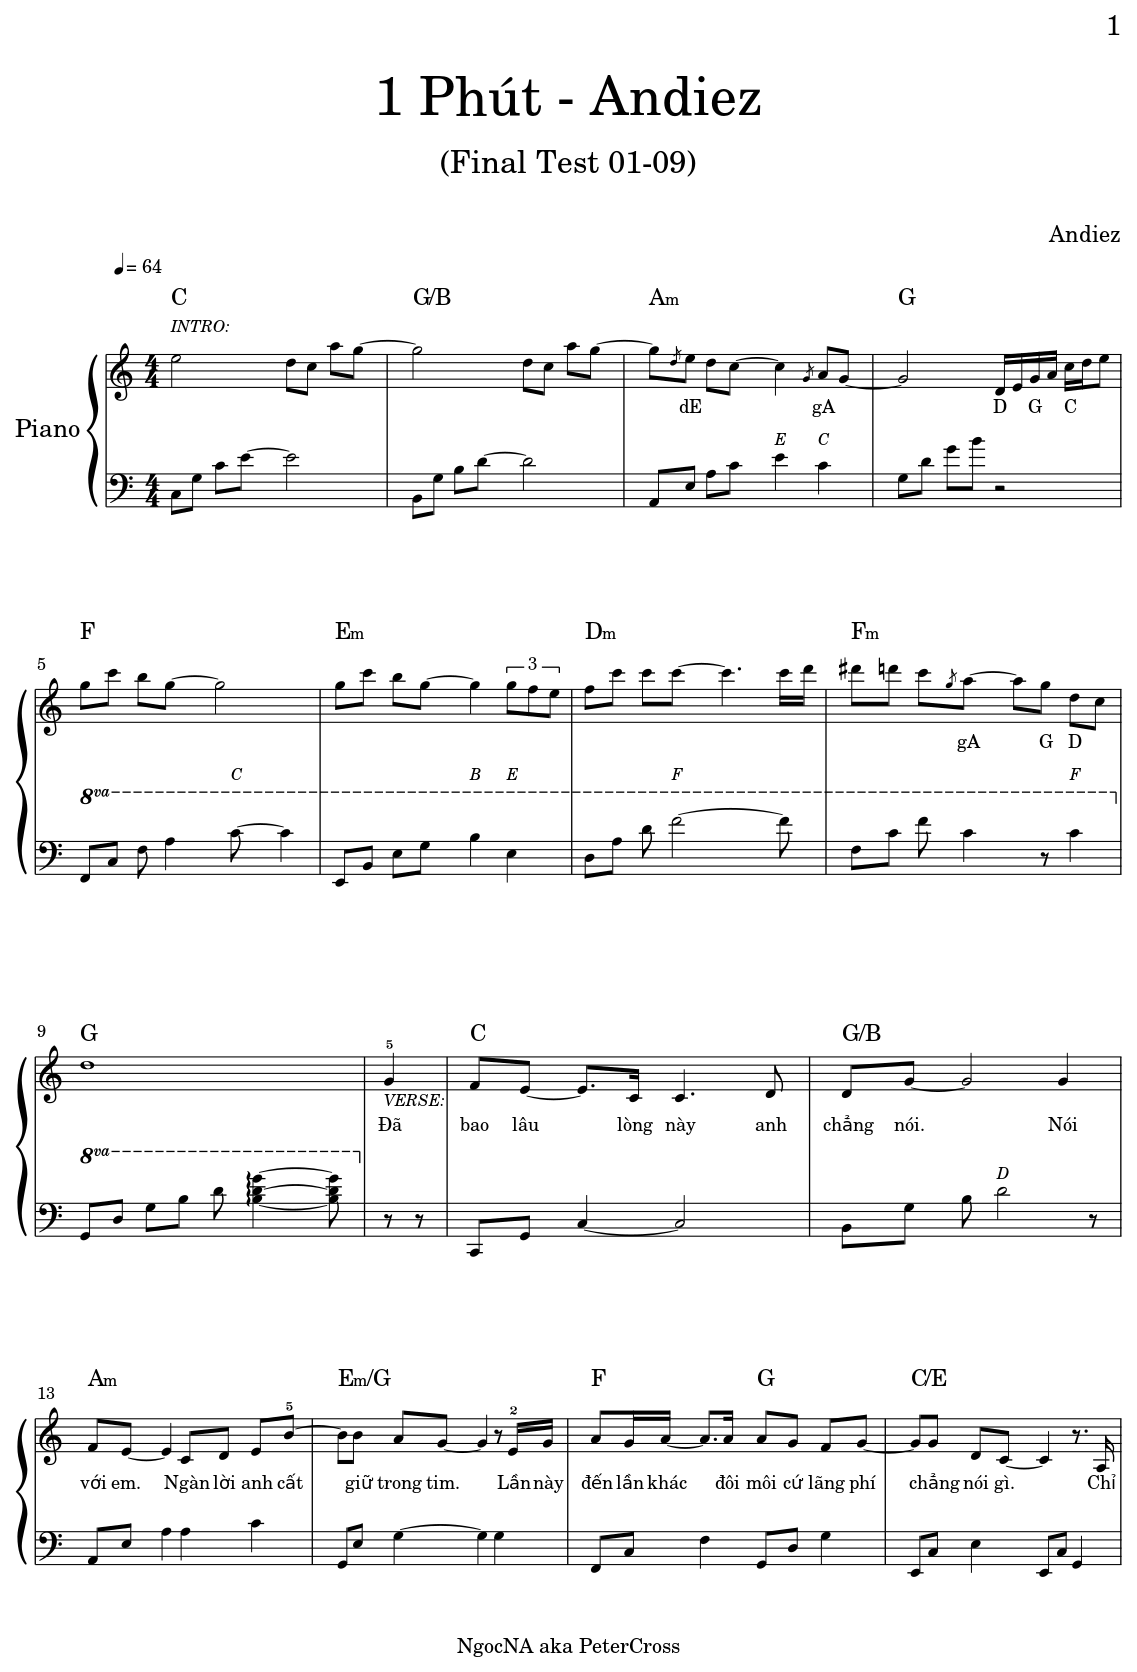 1 Phút - Andiez - Sheet music for Piano